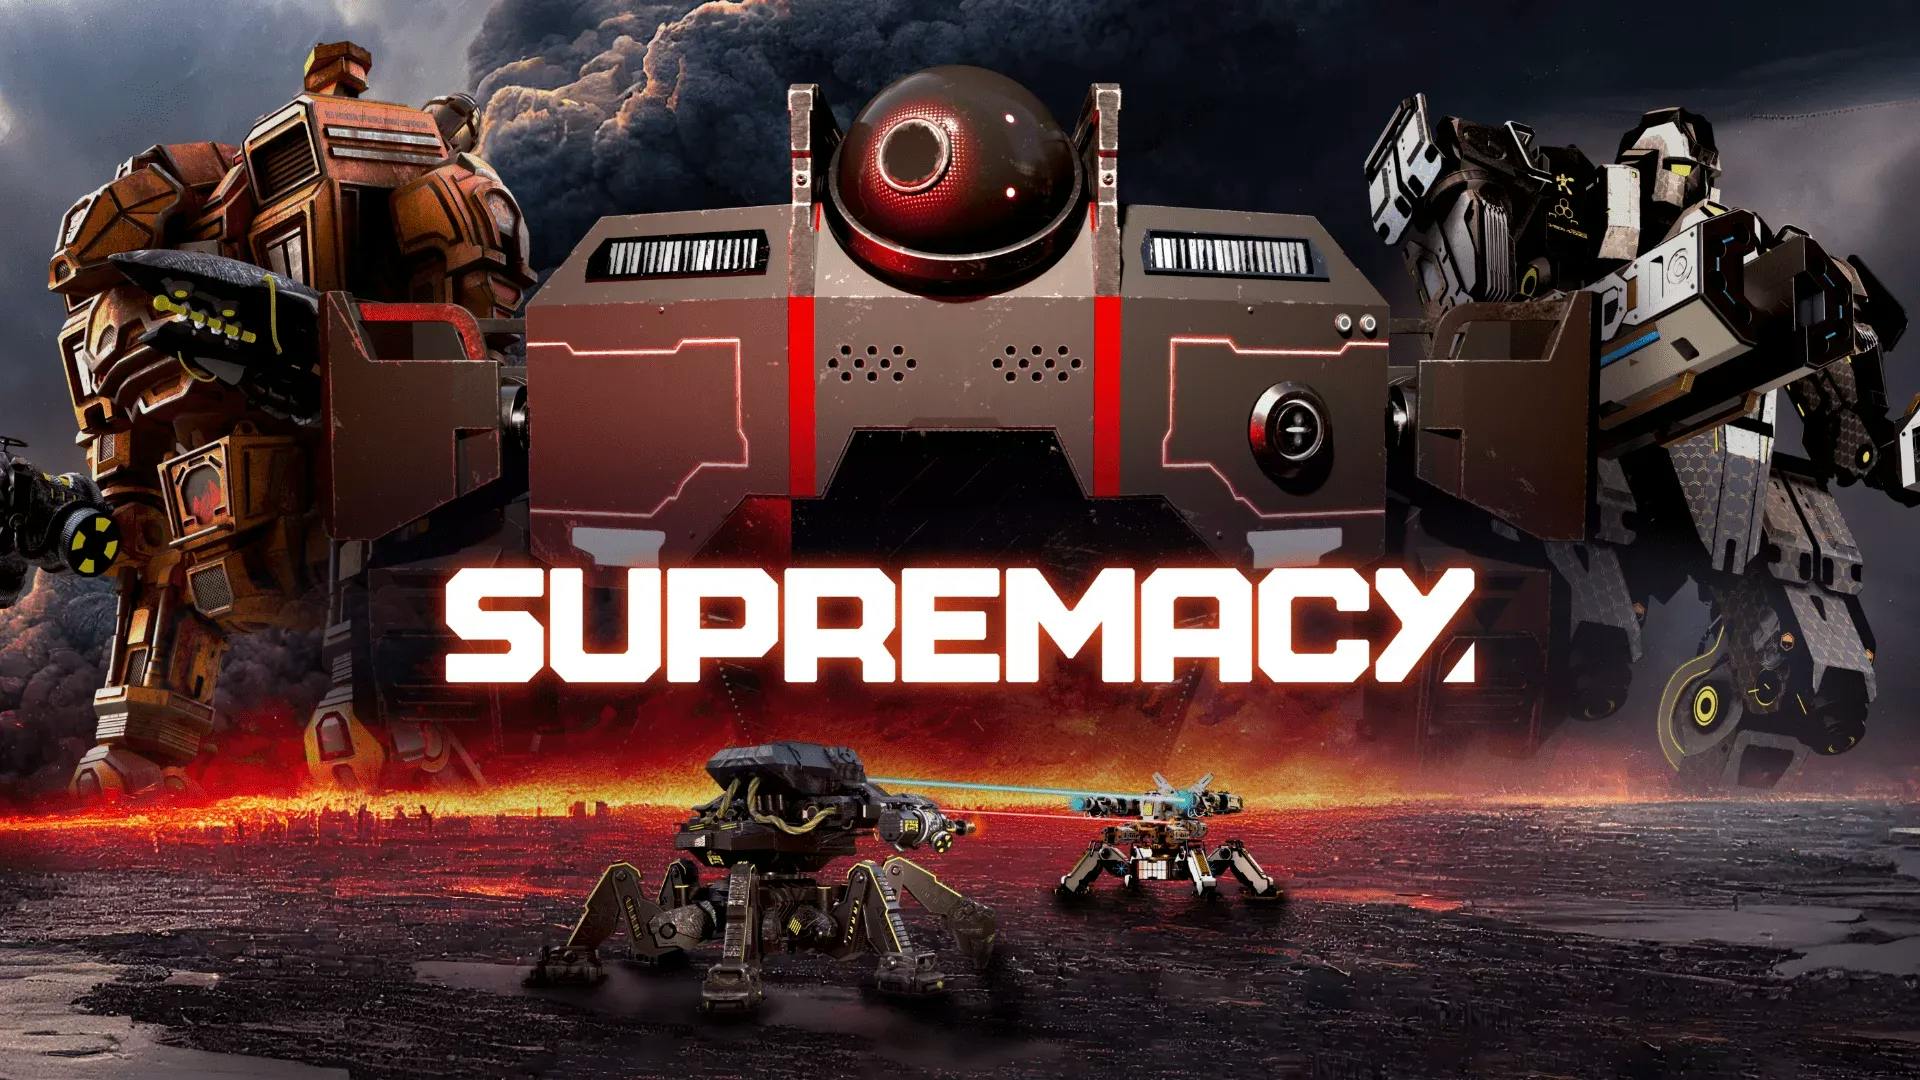 Supremacy game image 4.webp